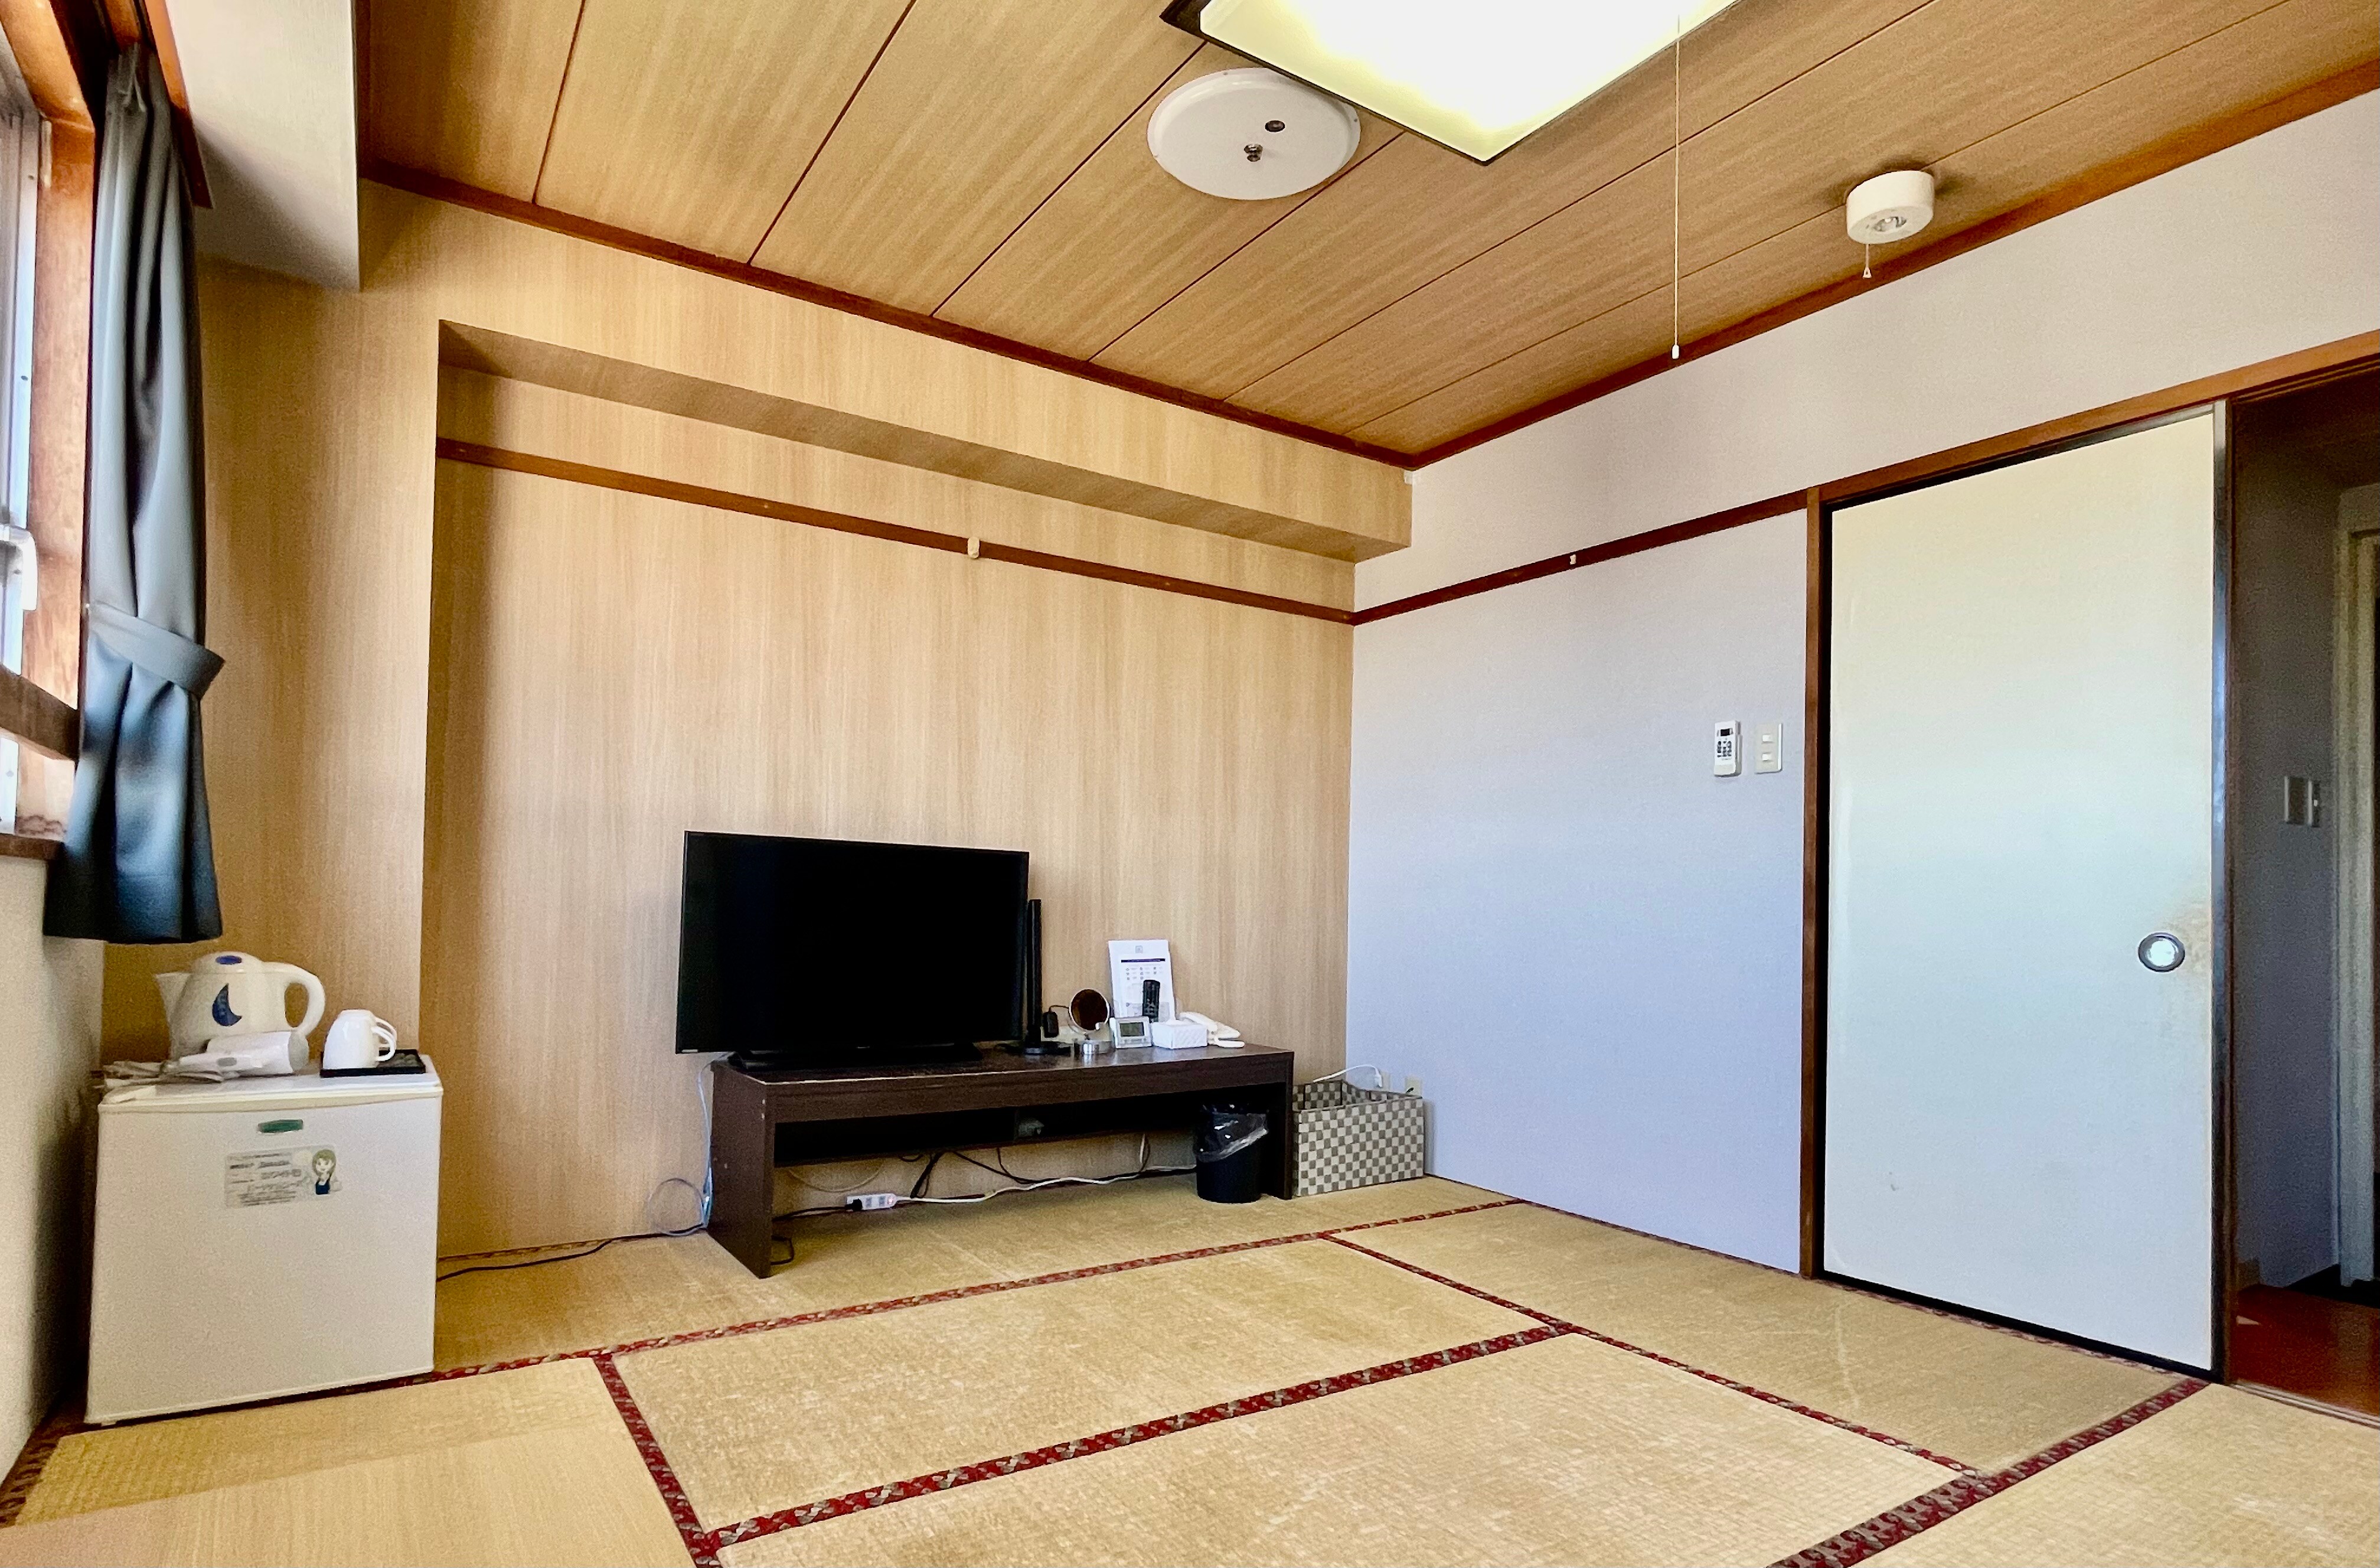 [Smoking] Japanese-style room 8 tatami mats